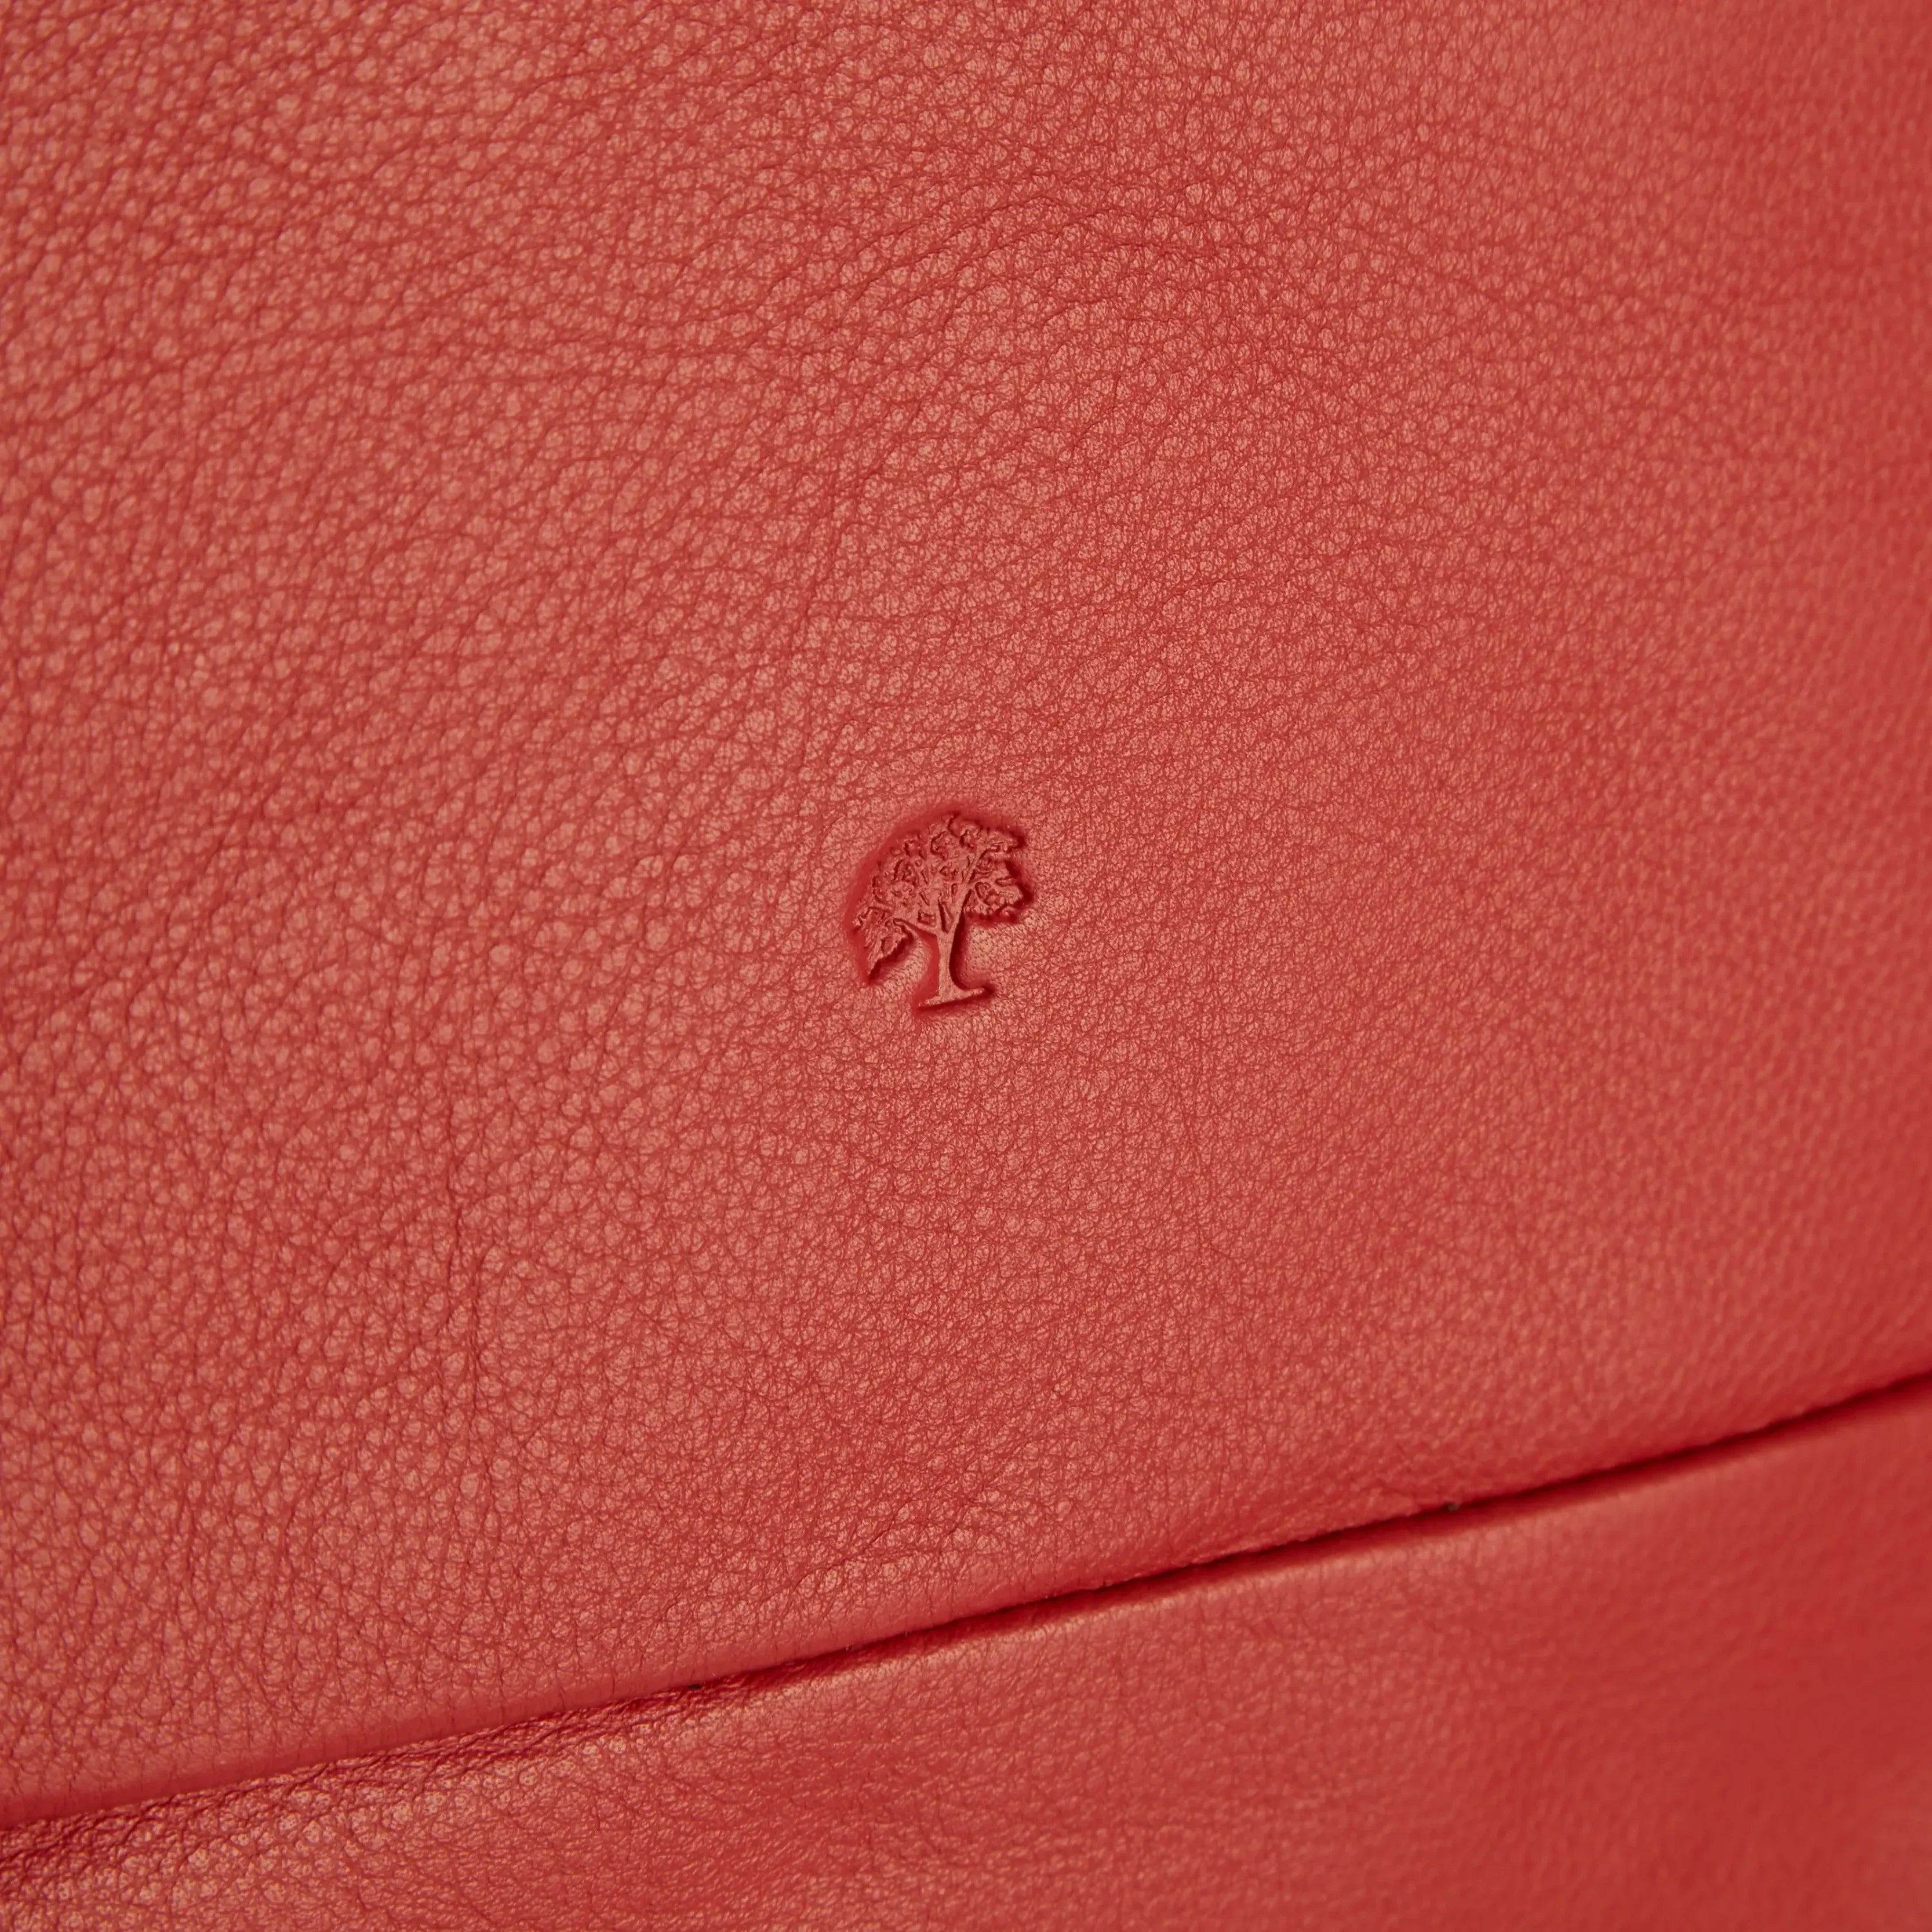 koffer-direkt.de Prato leather backpack 34 cm - light gray